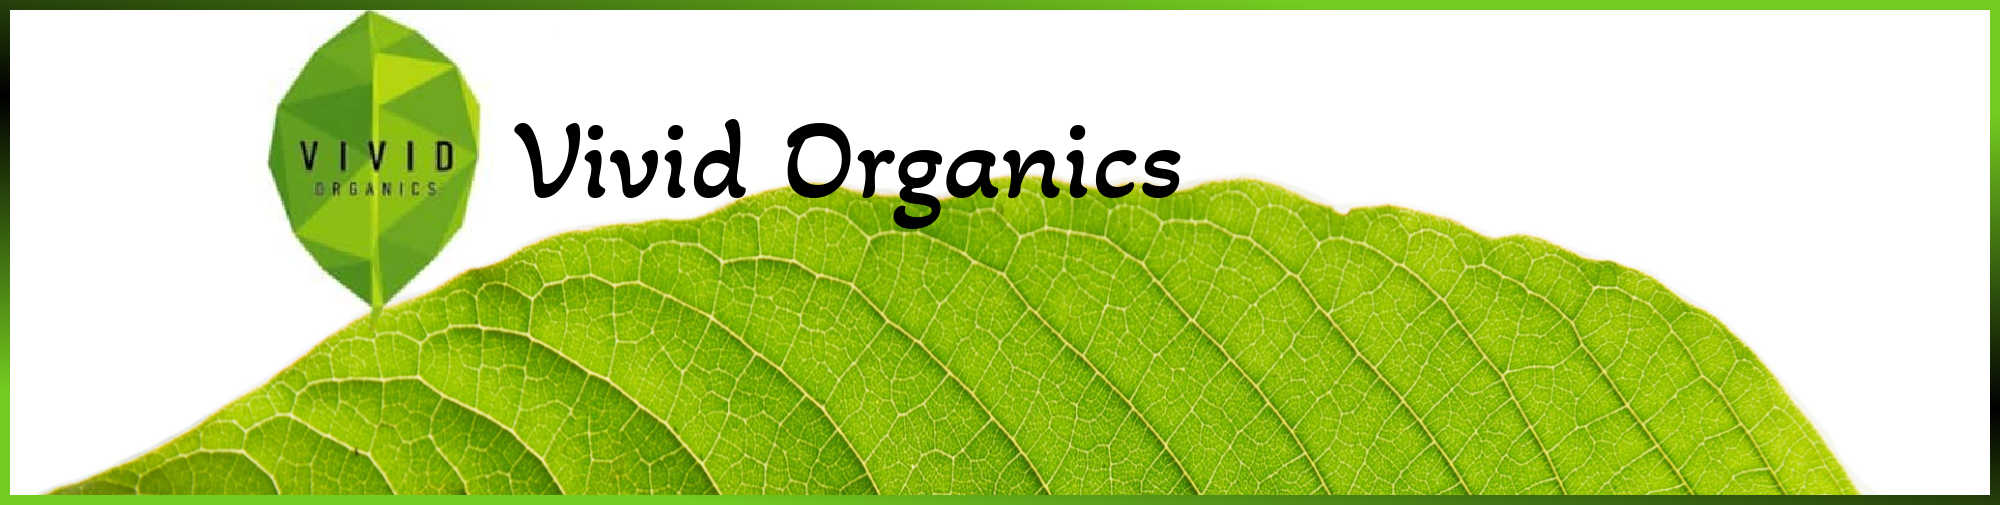 image of vivid organics